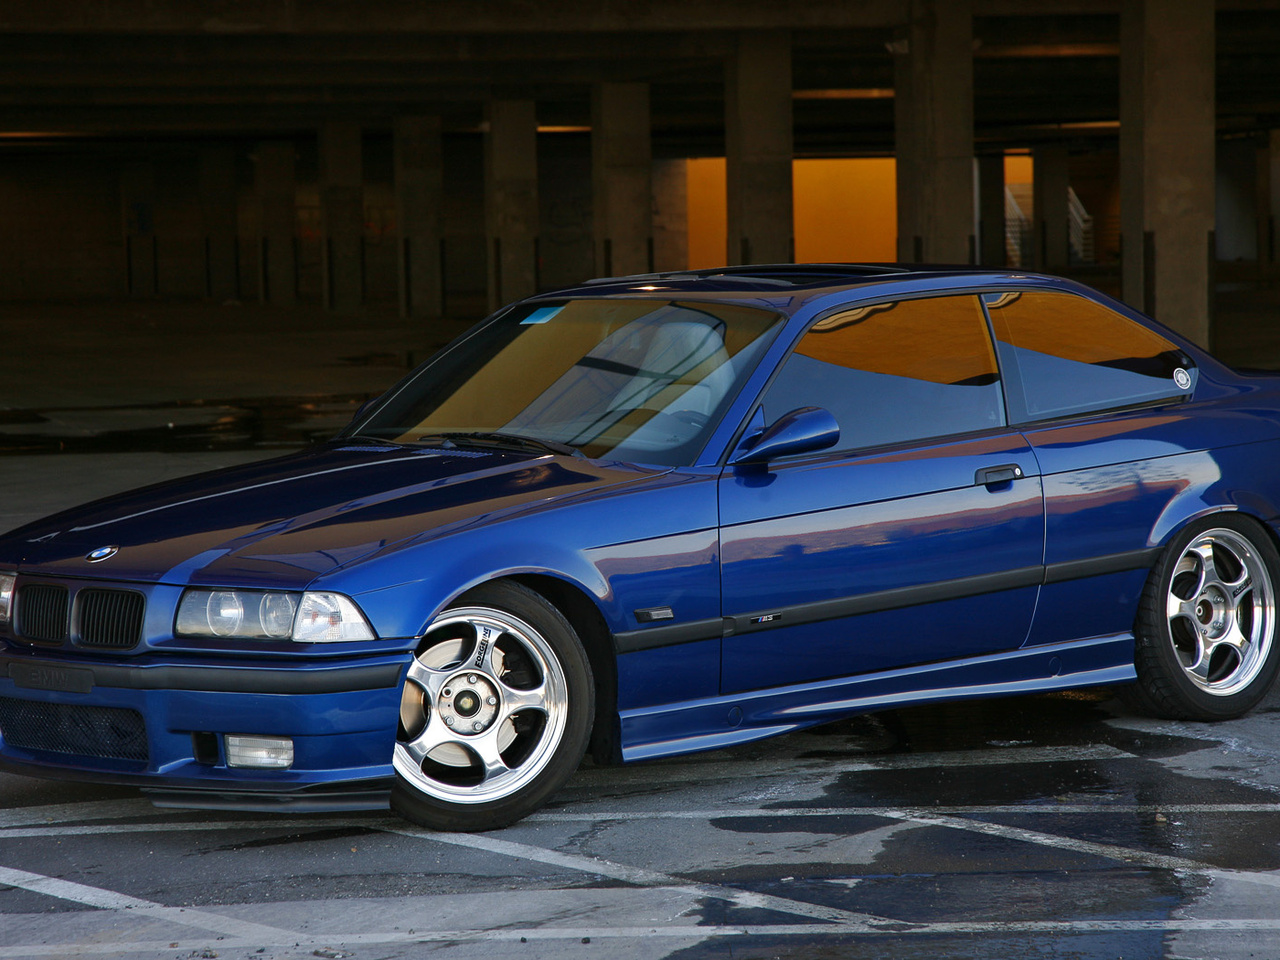 Wallpaper Bmw E36 M3 Series Three Blue Coupe Sports Car